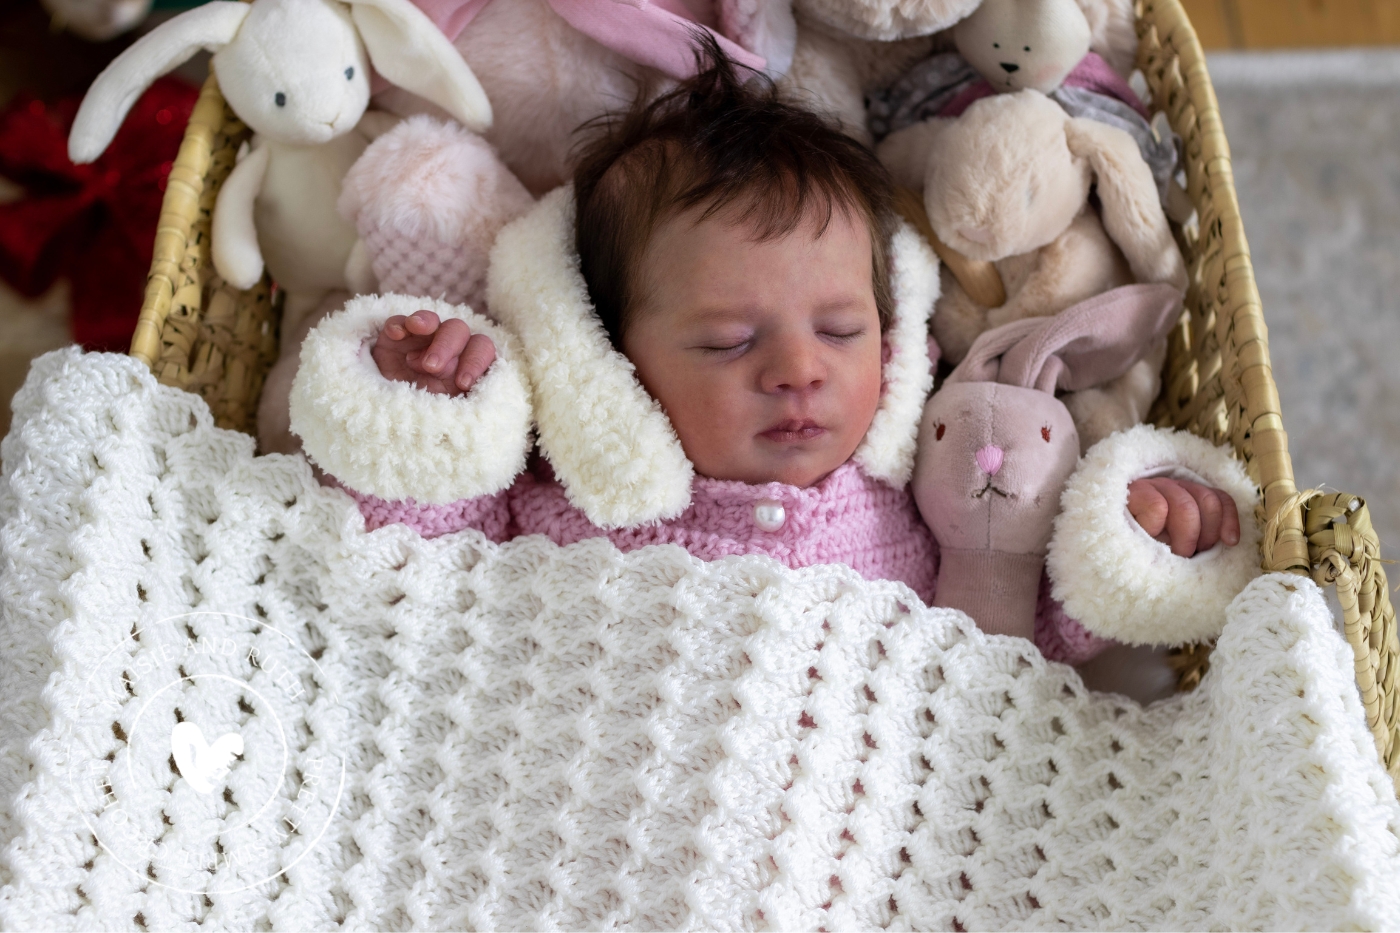 shell crochet baby blanket over baby